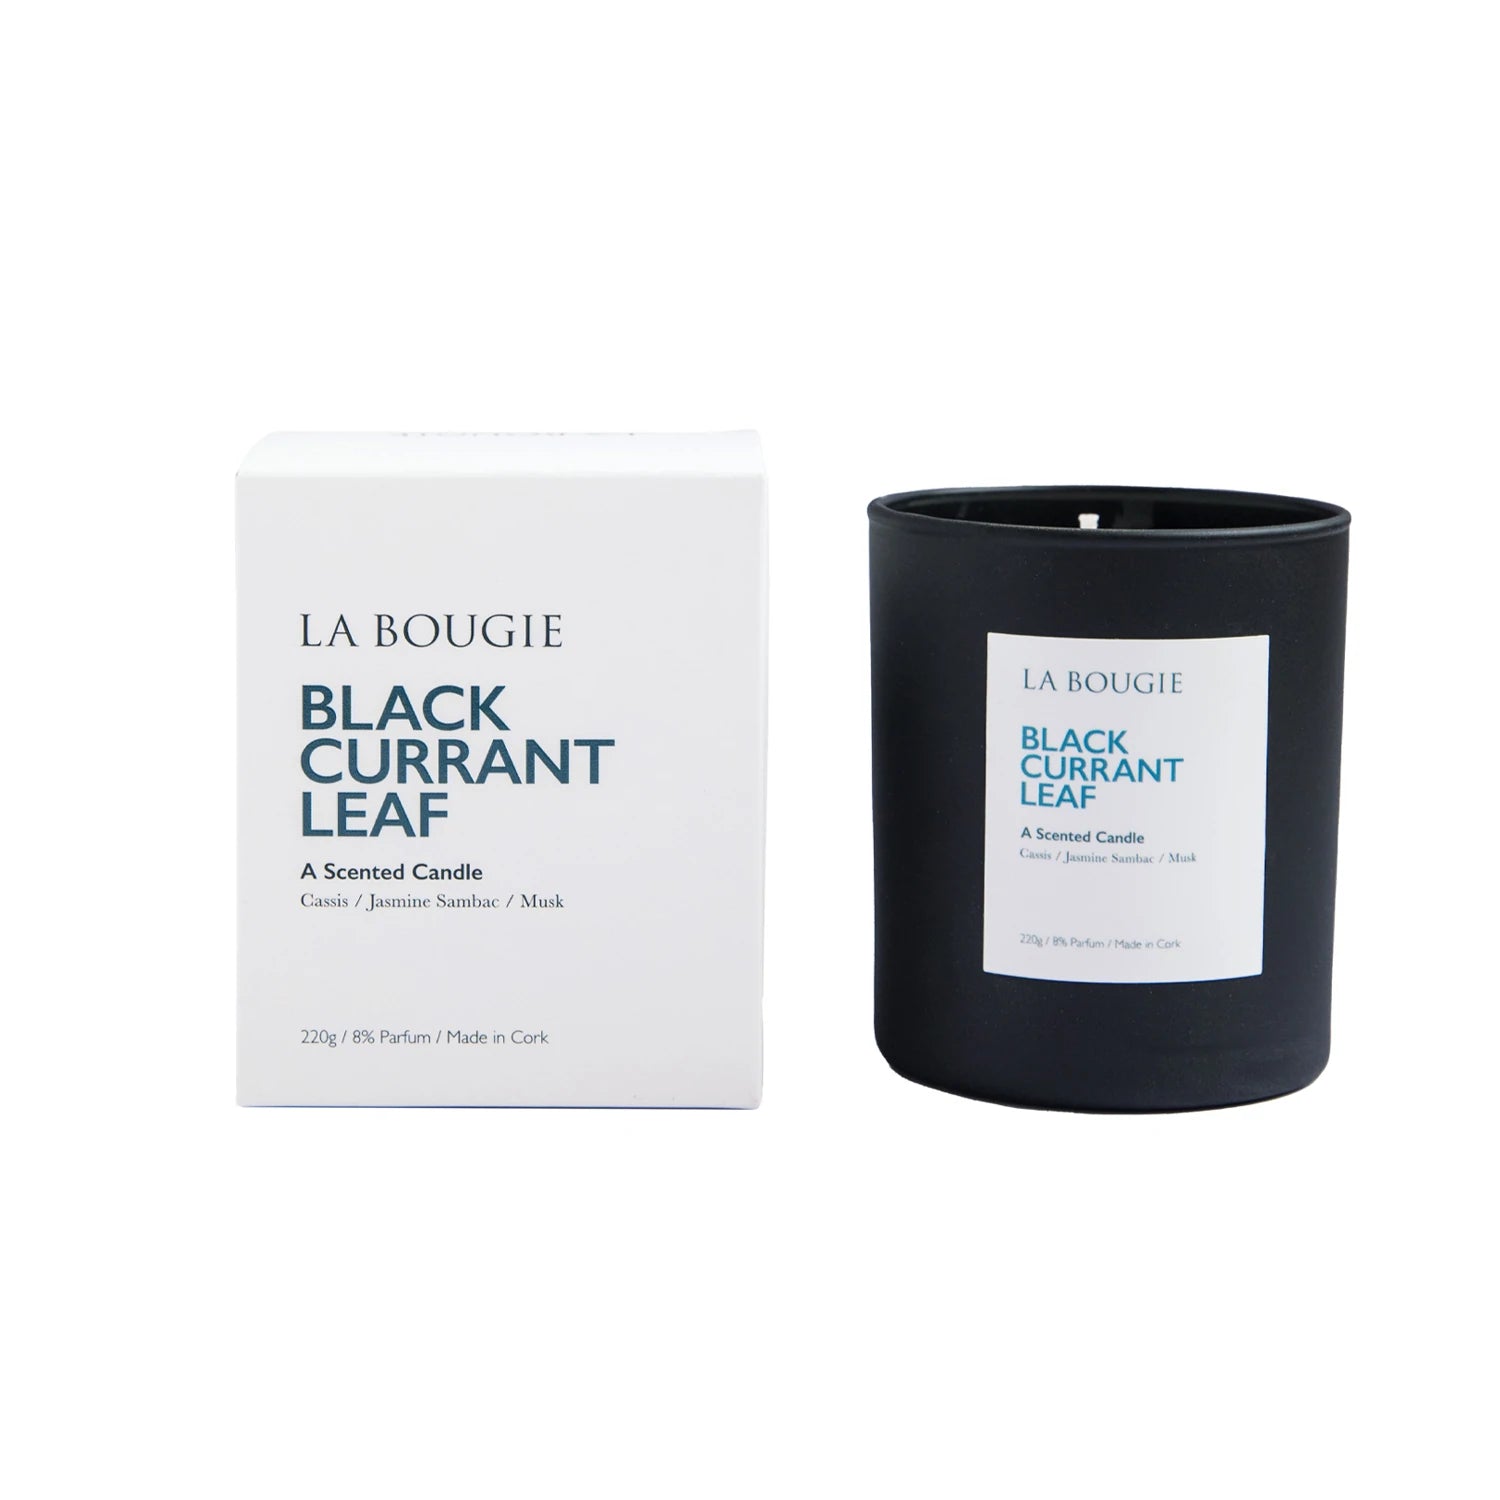 La Bougie Blackcurrant Leaf Candle